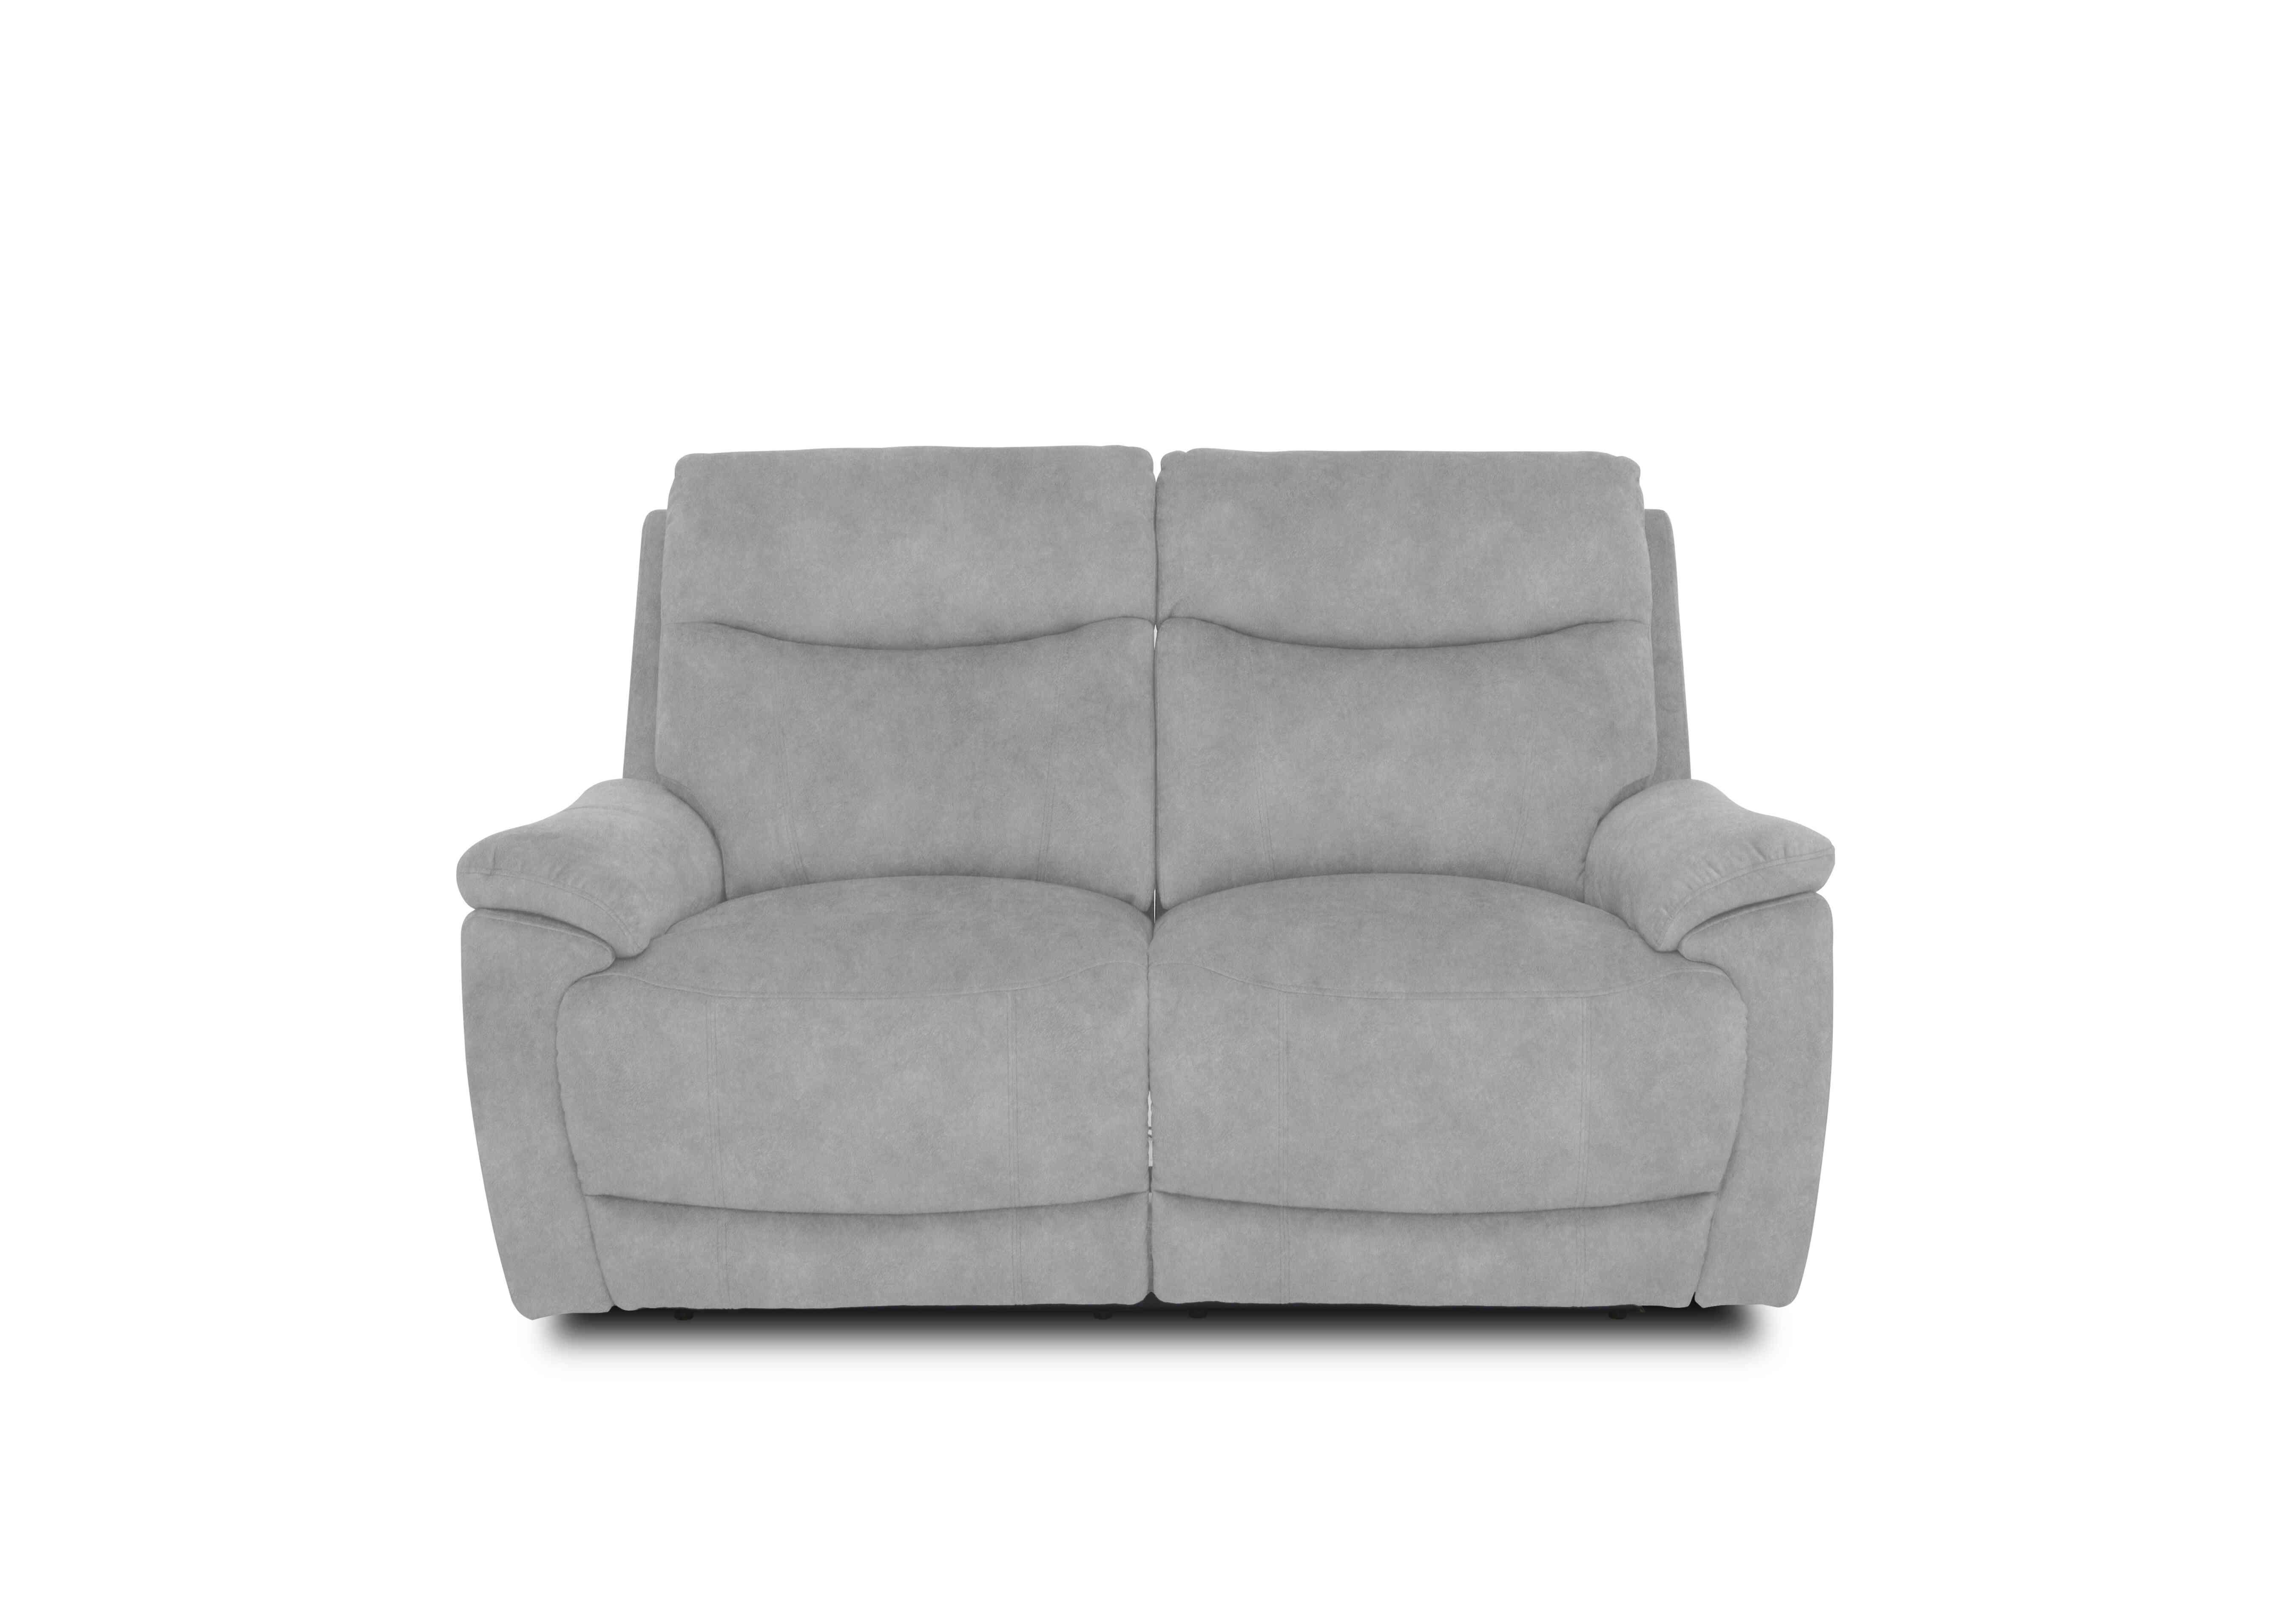 Sloane 2 Seater Fabric Sofa in 43516 Dexter Smoke on Furniture Village